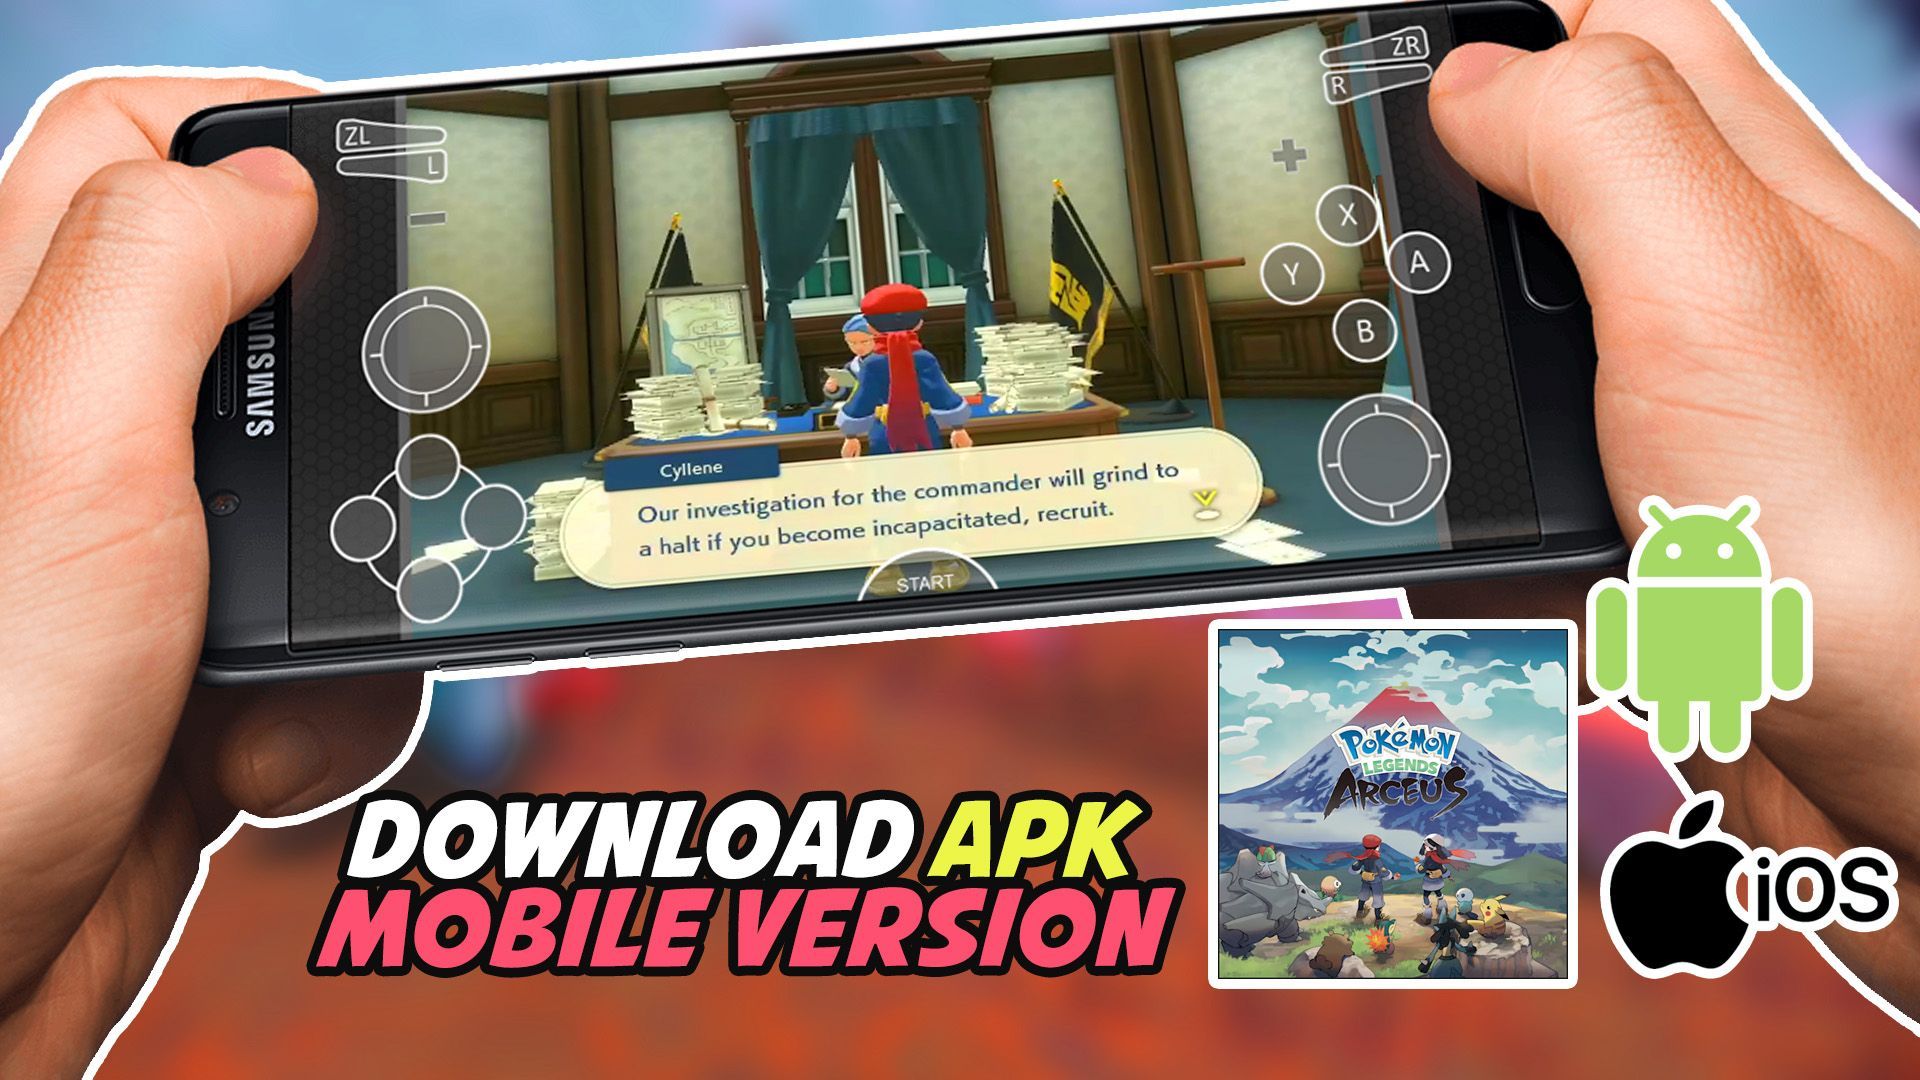 Pokemon Legends Arceus APK 1.0 Download - Latest version